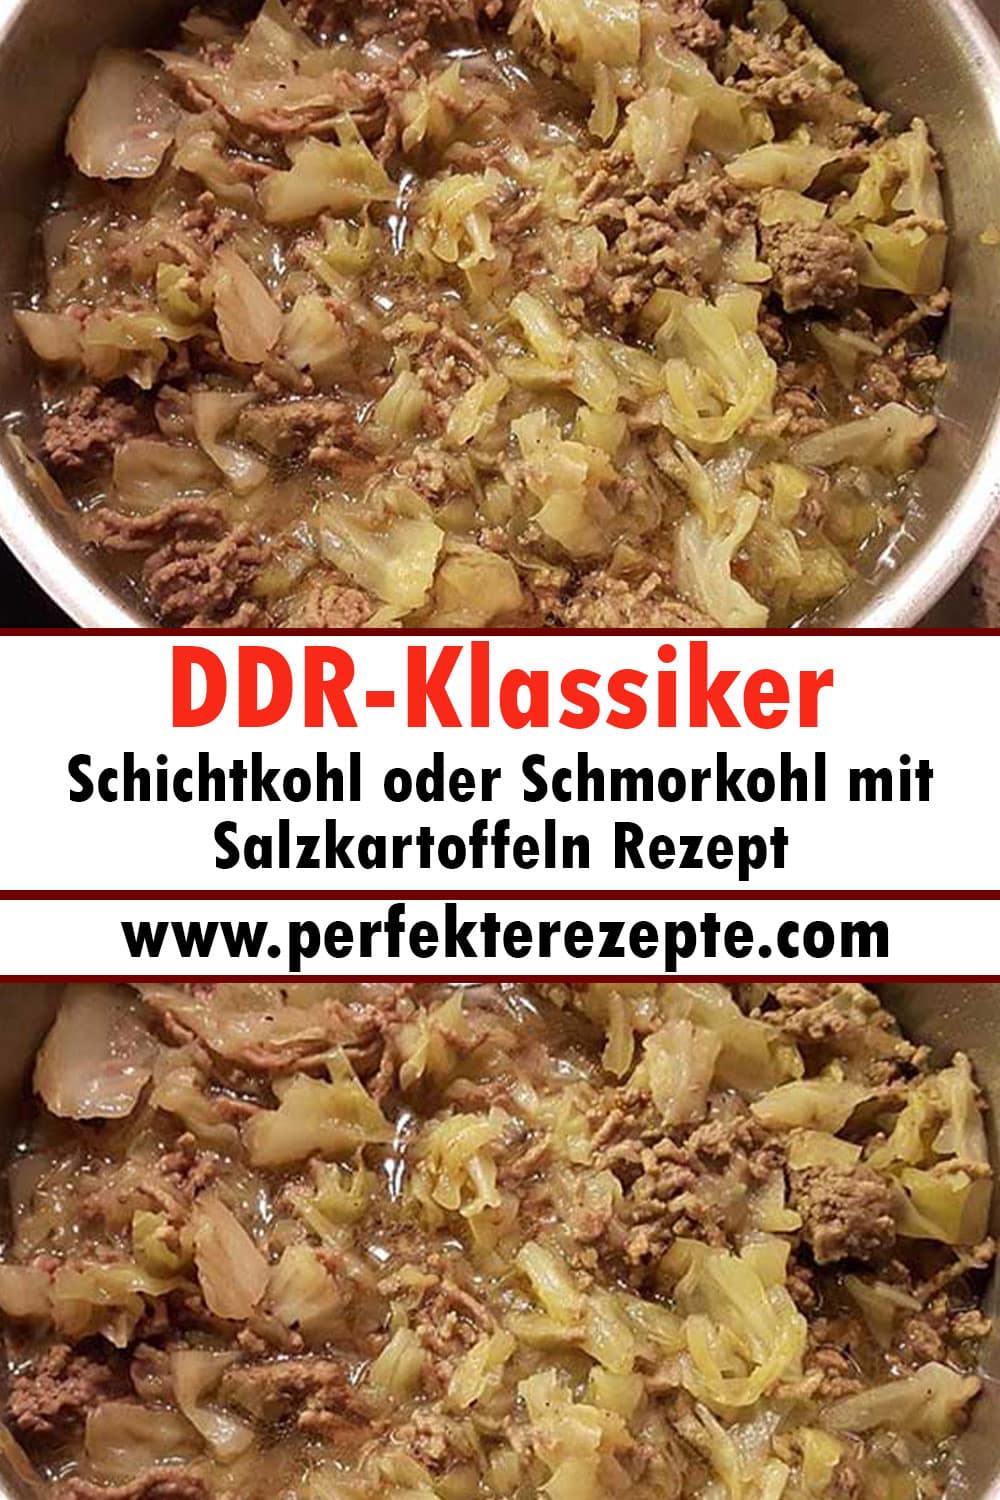 DDR-Klassiker Schichtkohl oder Schmorkohl mit Salzkartoffeln Rezept